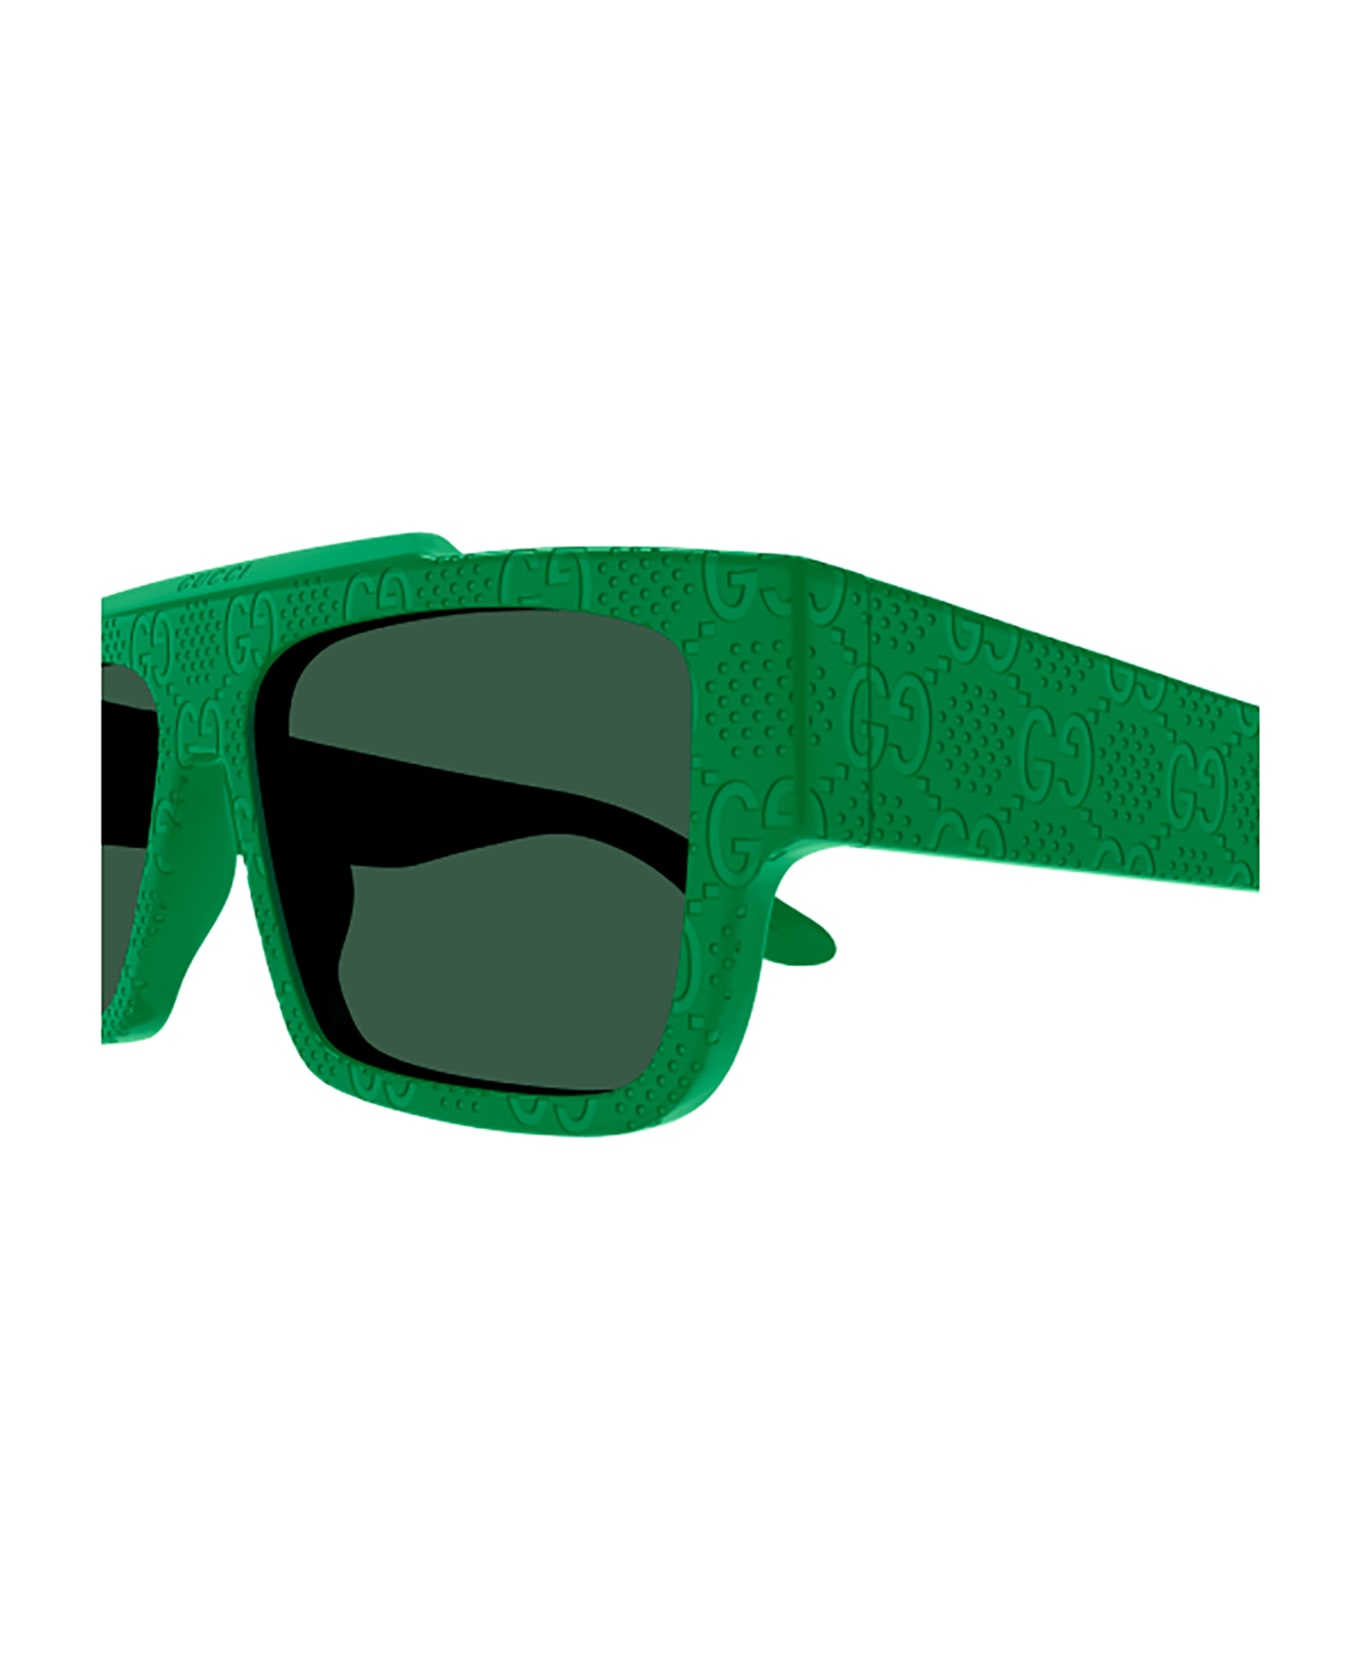 Gucci Eyewear GG1460S Sunglasses - Green Green Green